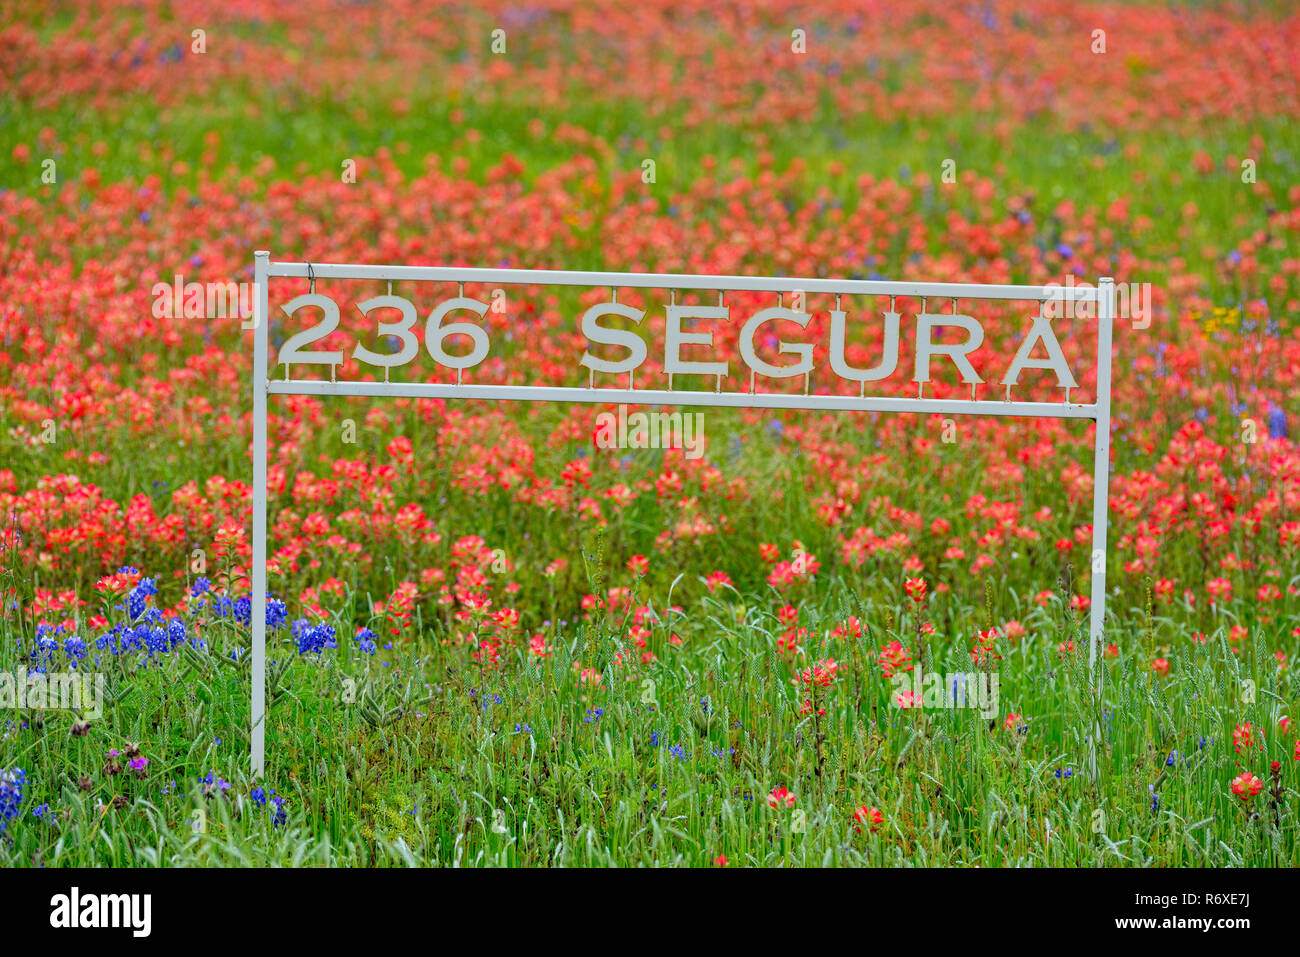 Roadside wildflowers along Segura Lane featuring Texas paintbrush, with property address sign, Llano County, Texas, USA Stock Photo